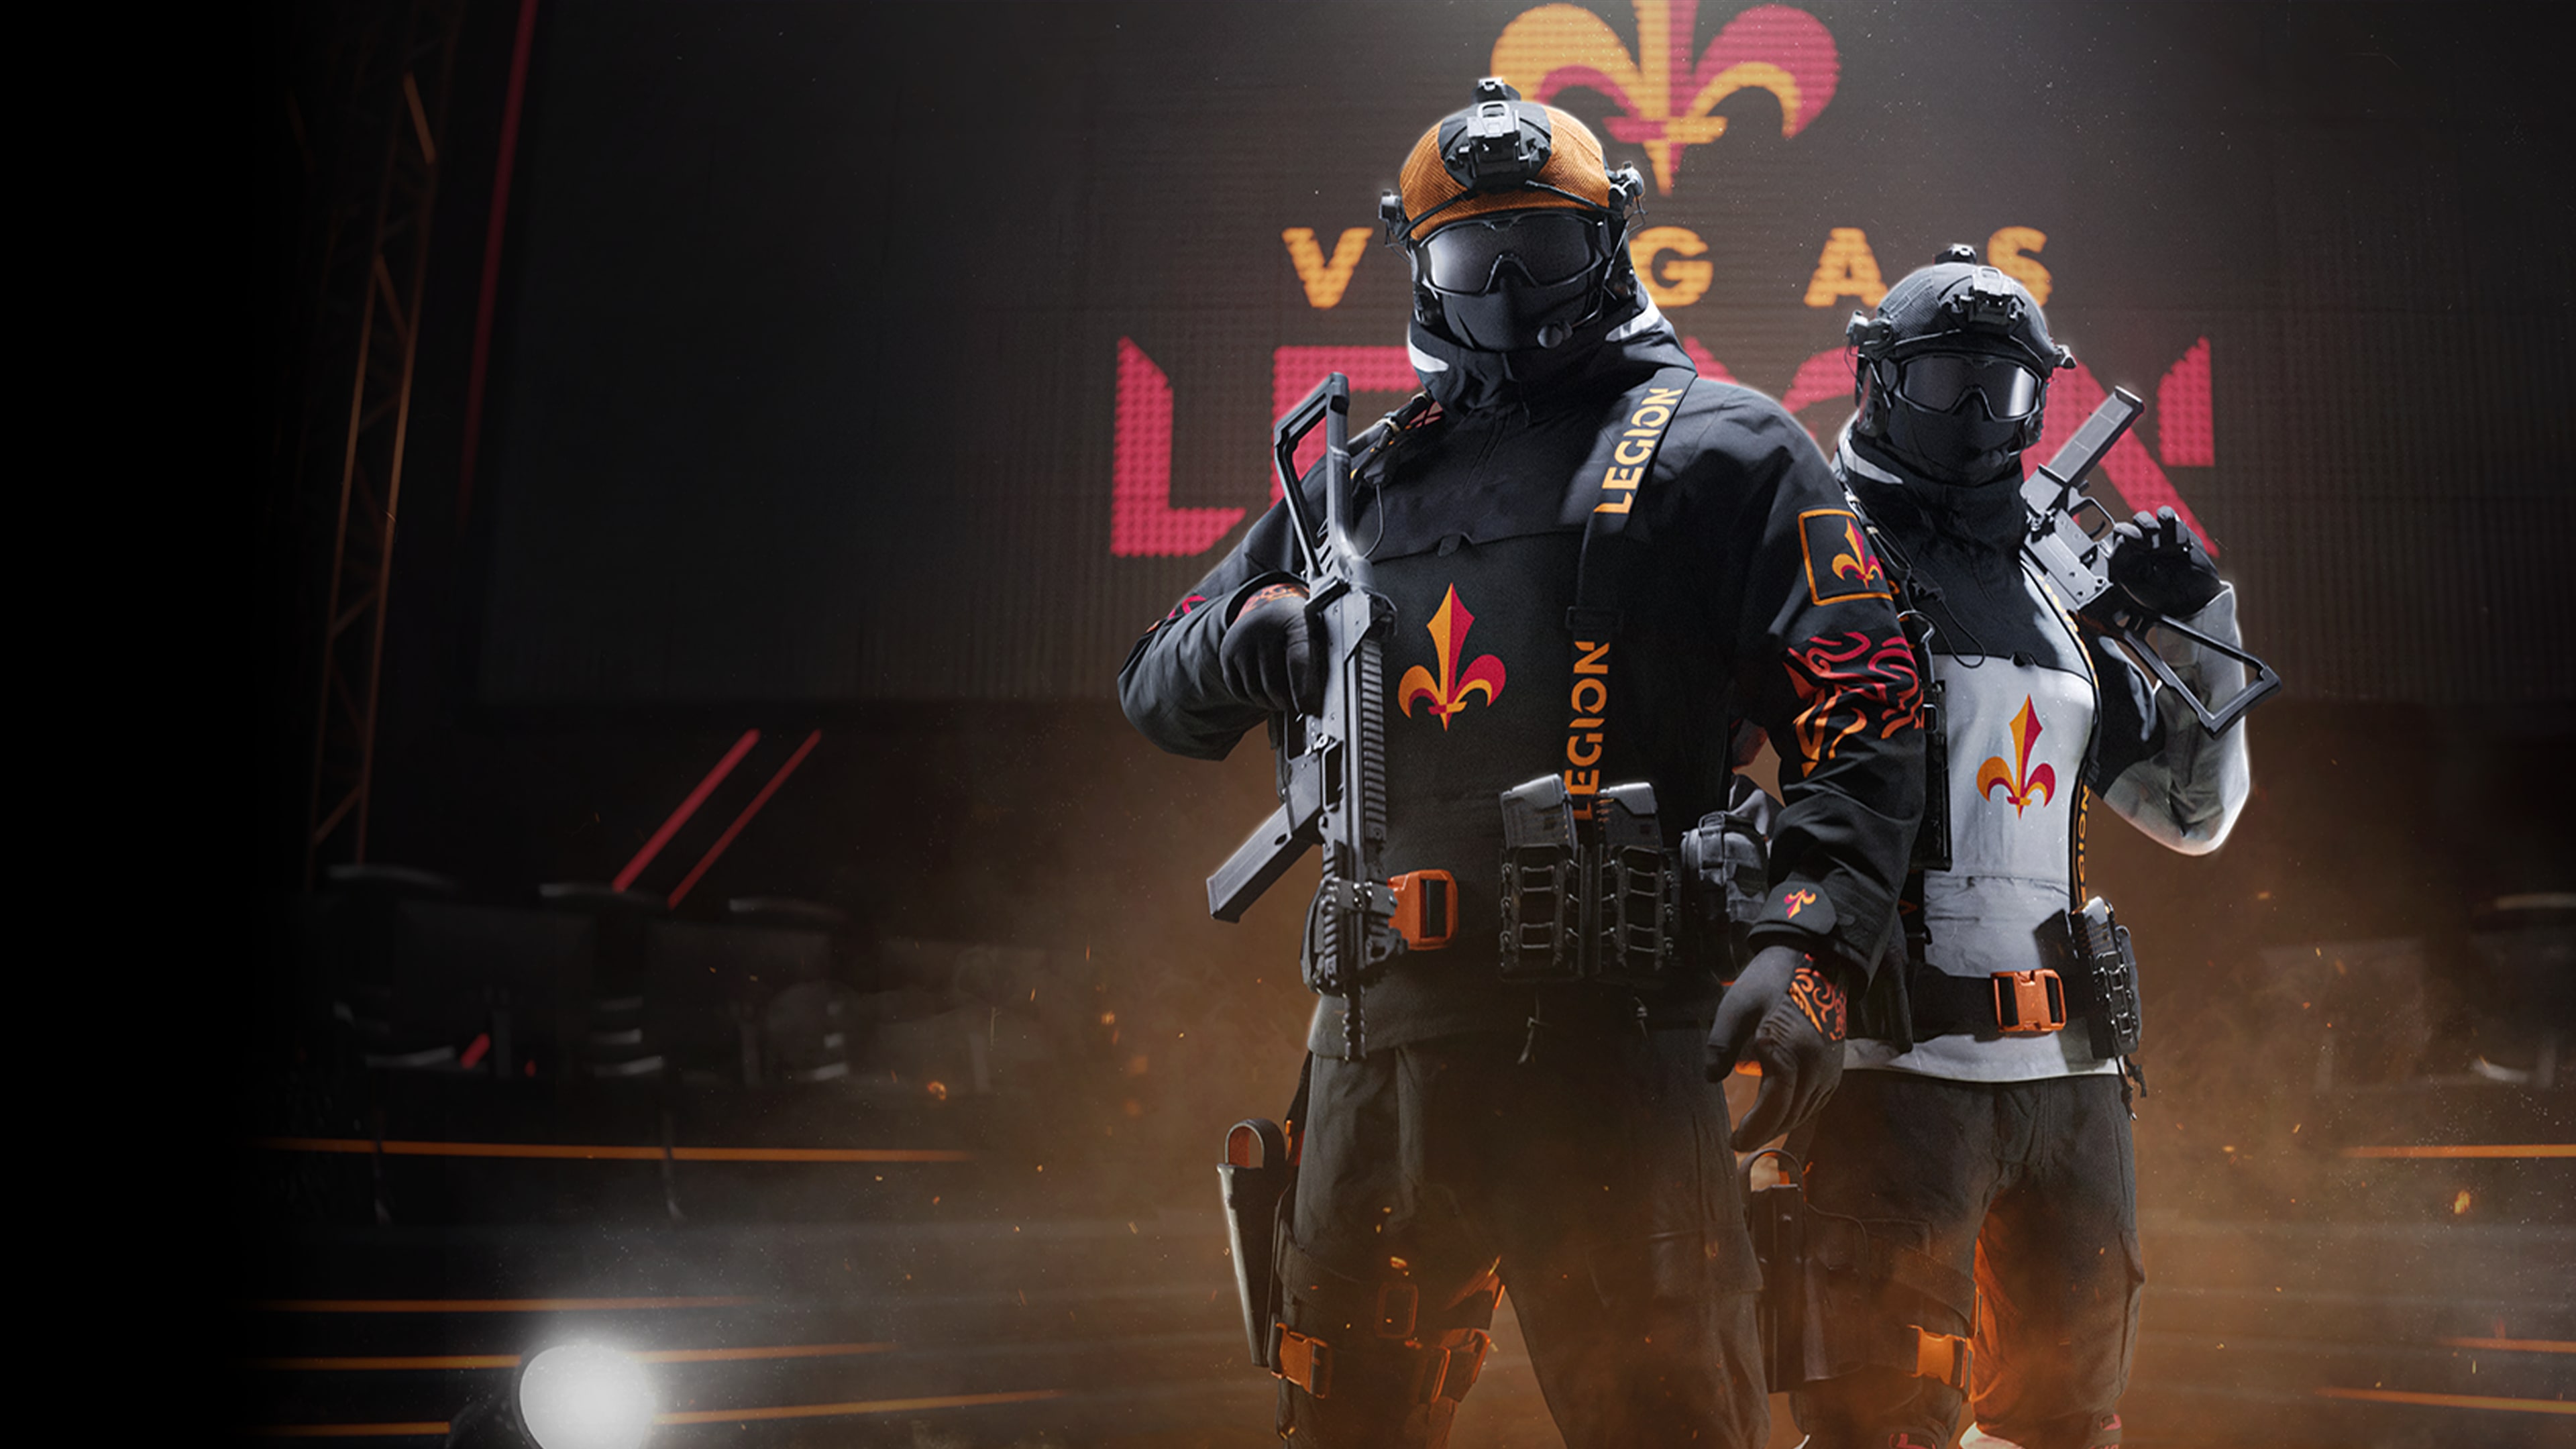 Call of Duty League™ - Vegas Legion Team Pack 2024